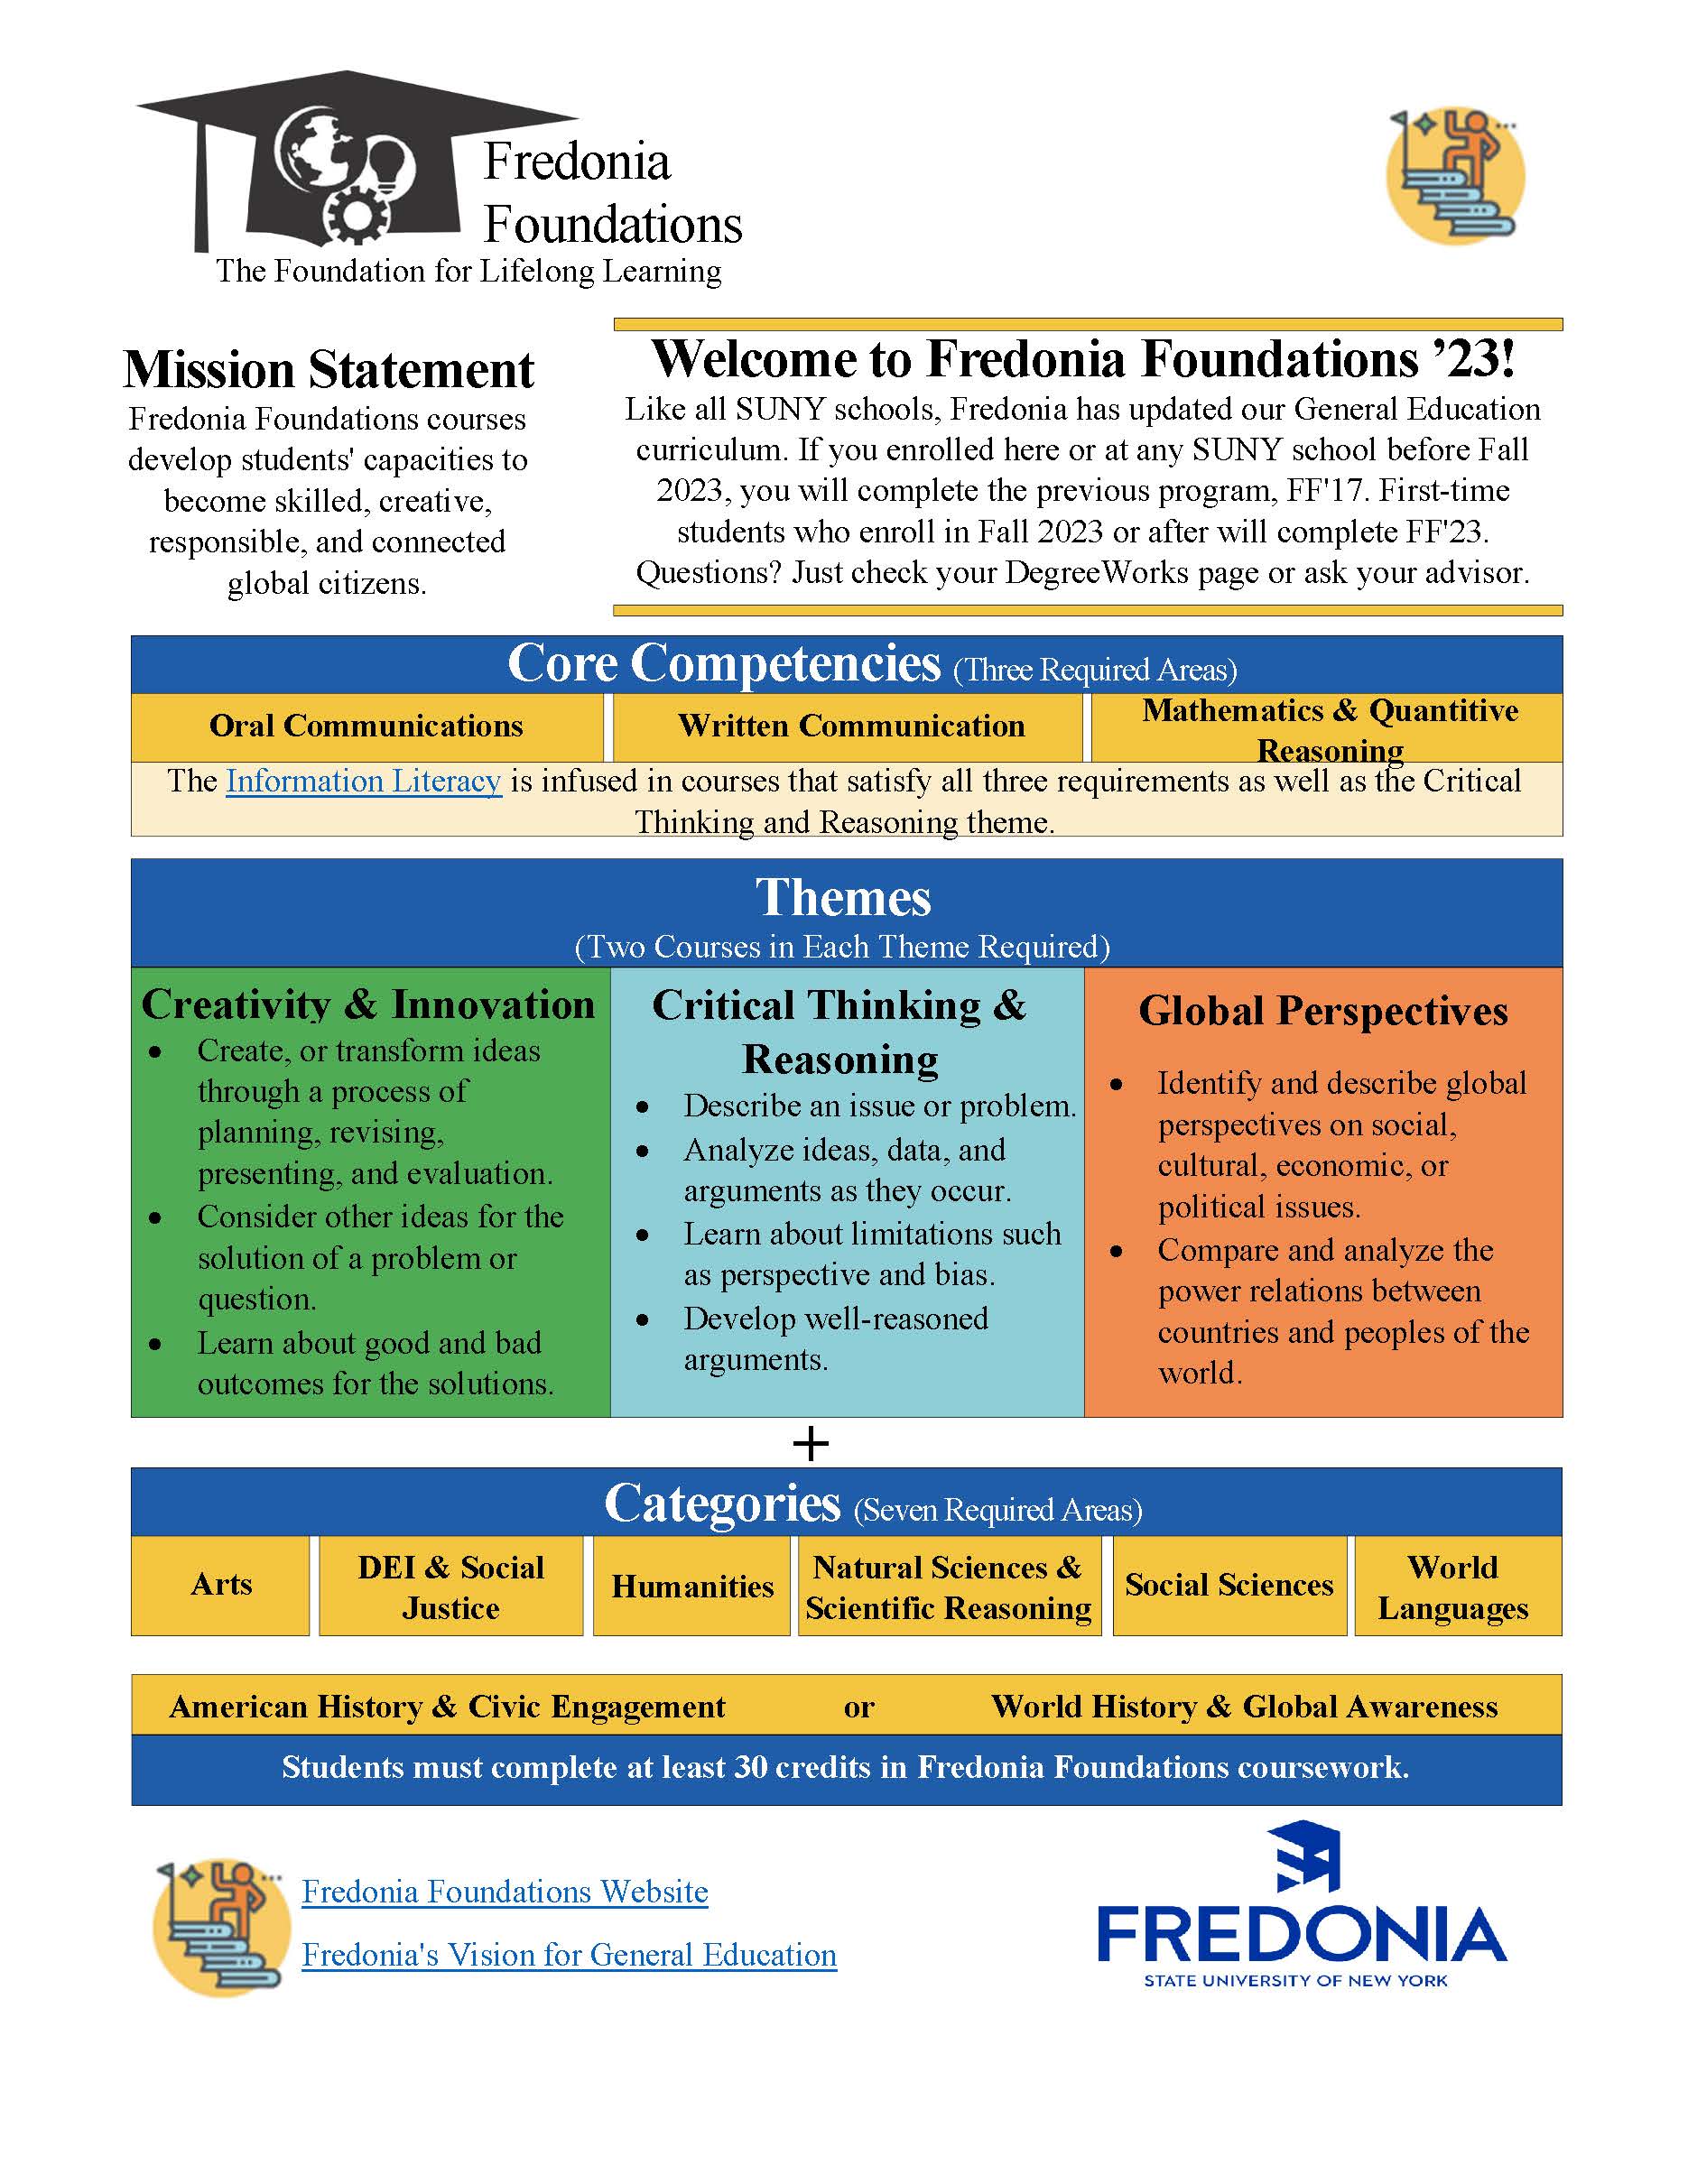 Fredonia Foundations 2023 (FF23) Information (JPG)